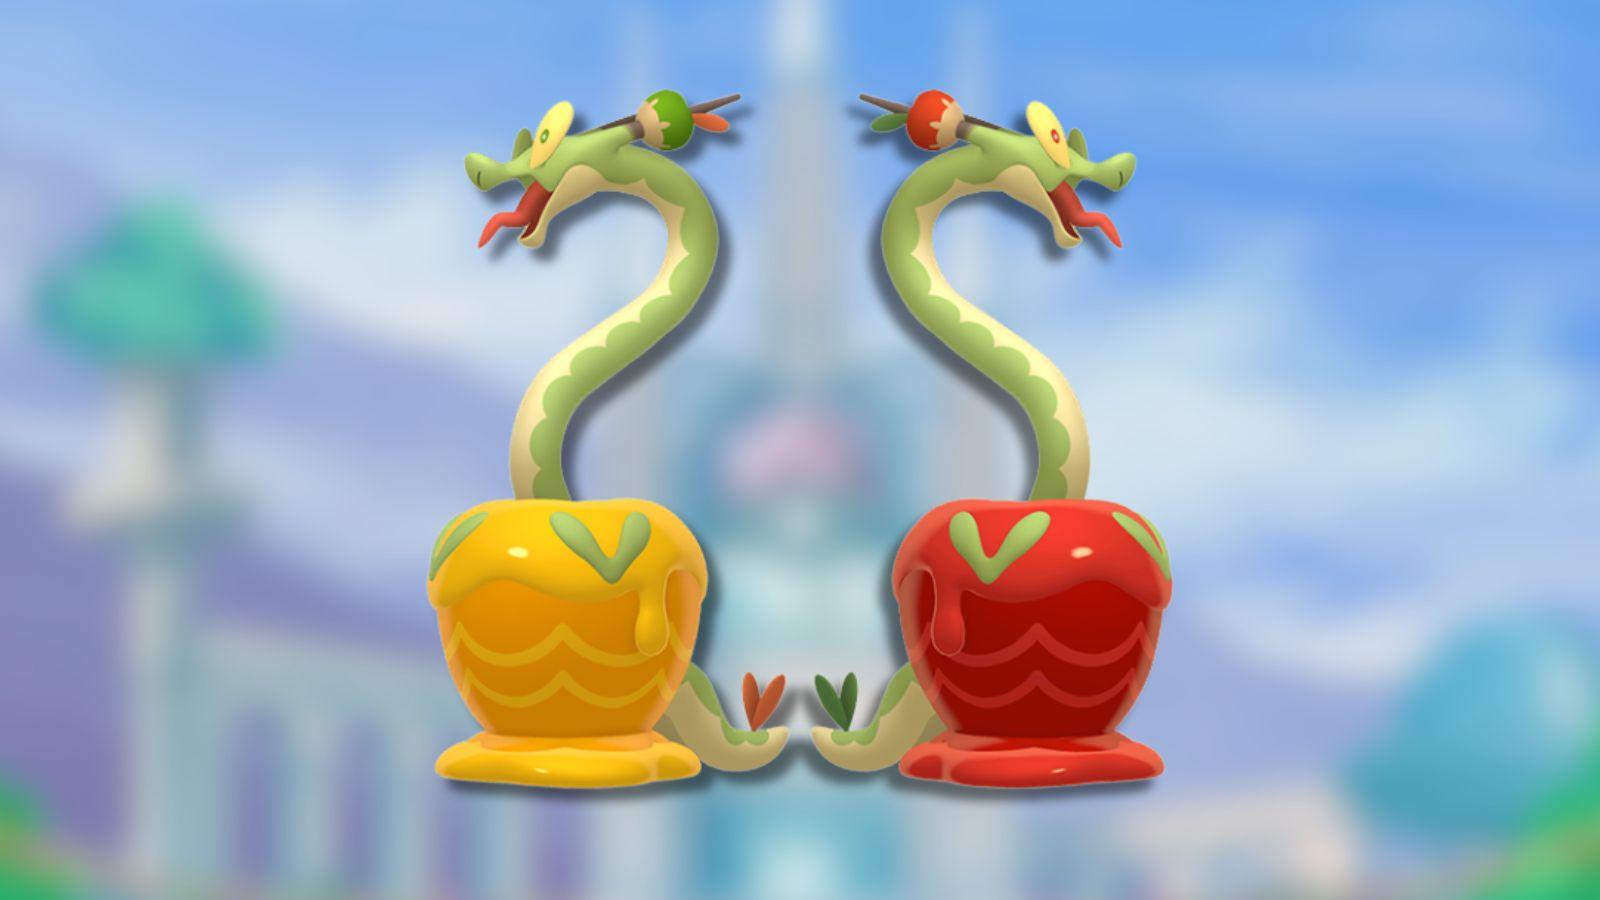 Hydrapple and Shiny Hydrapple with Pokemon SV background.